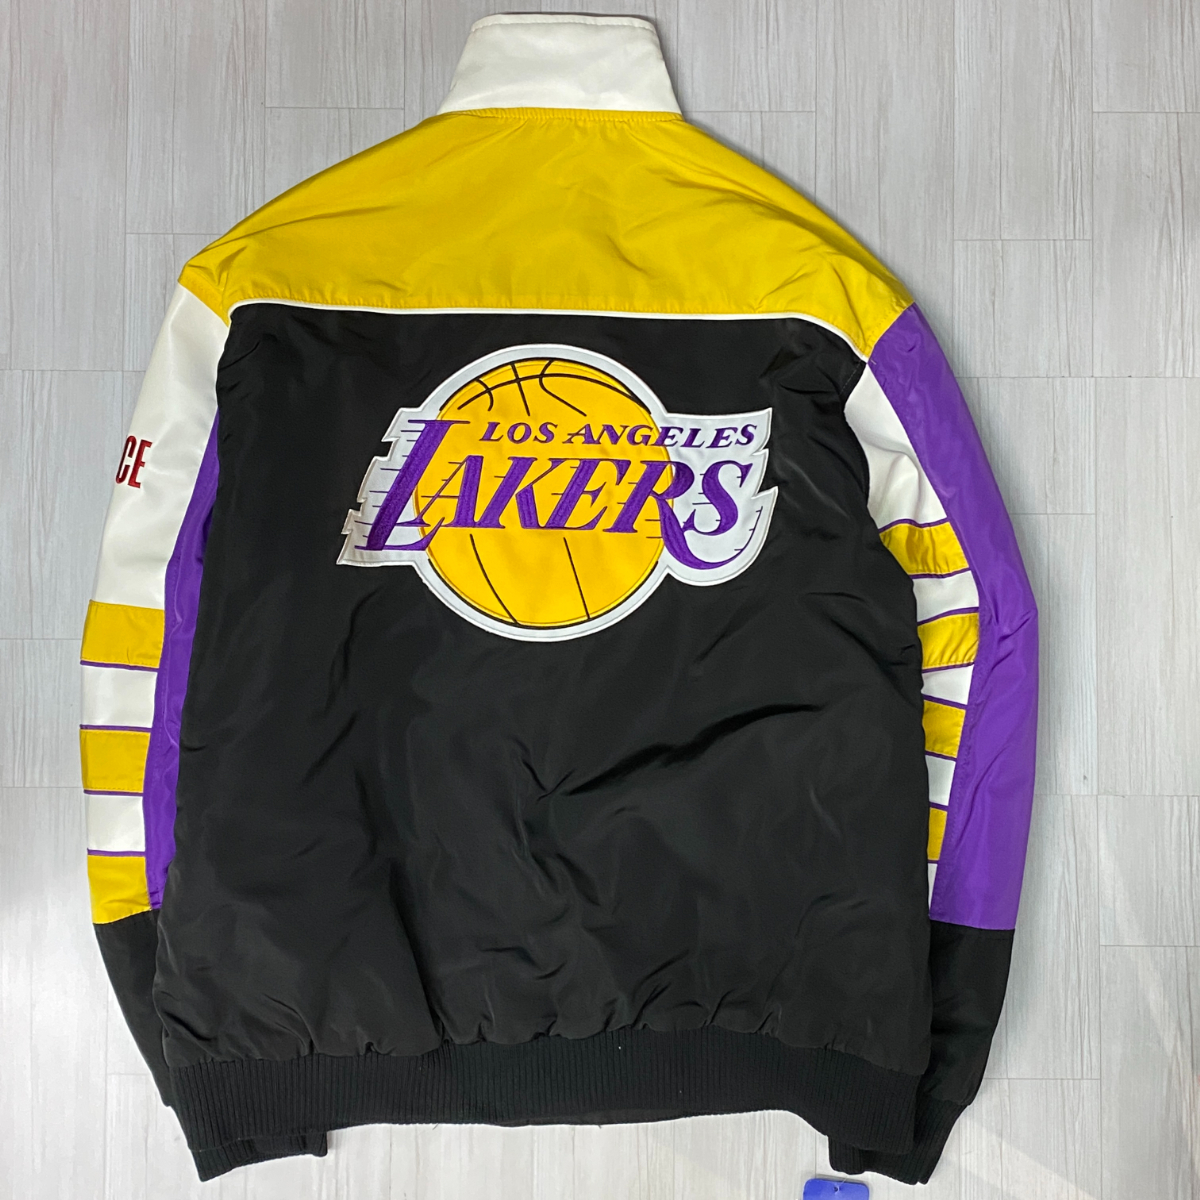 Los Angeles Lakers スタジャン リバーシブル - アウター